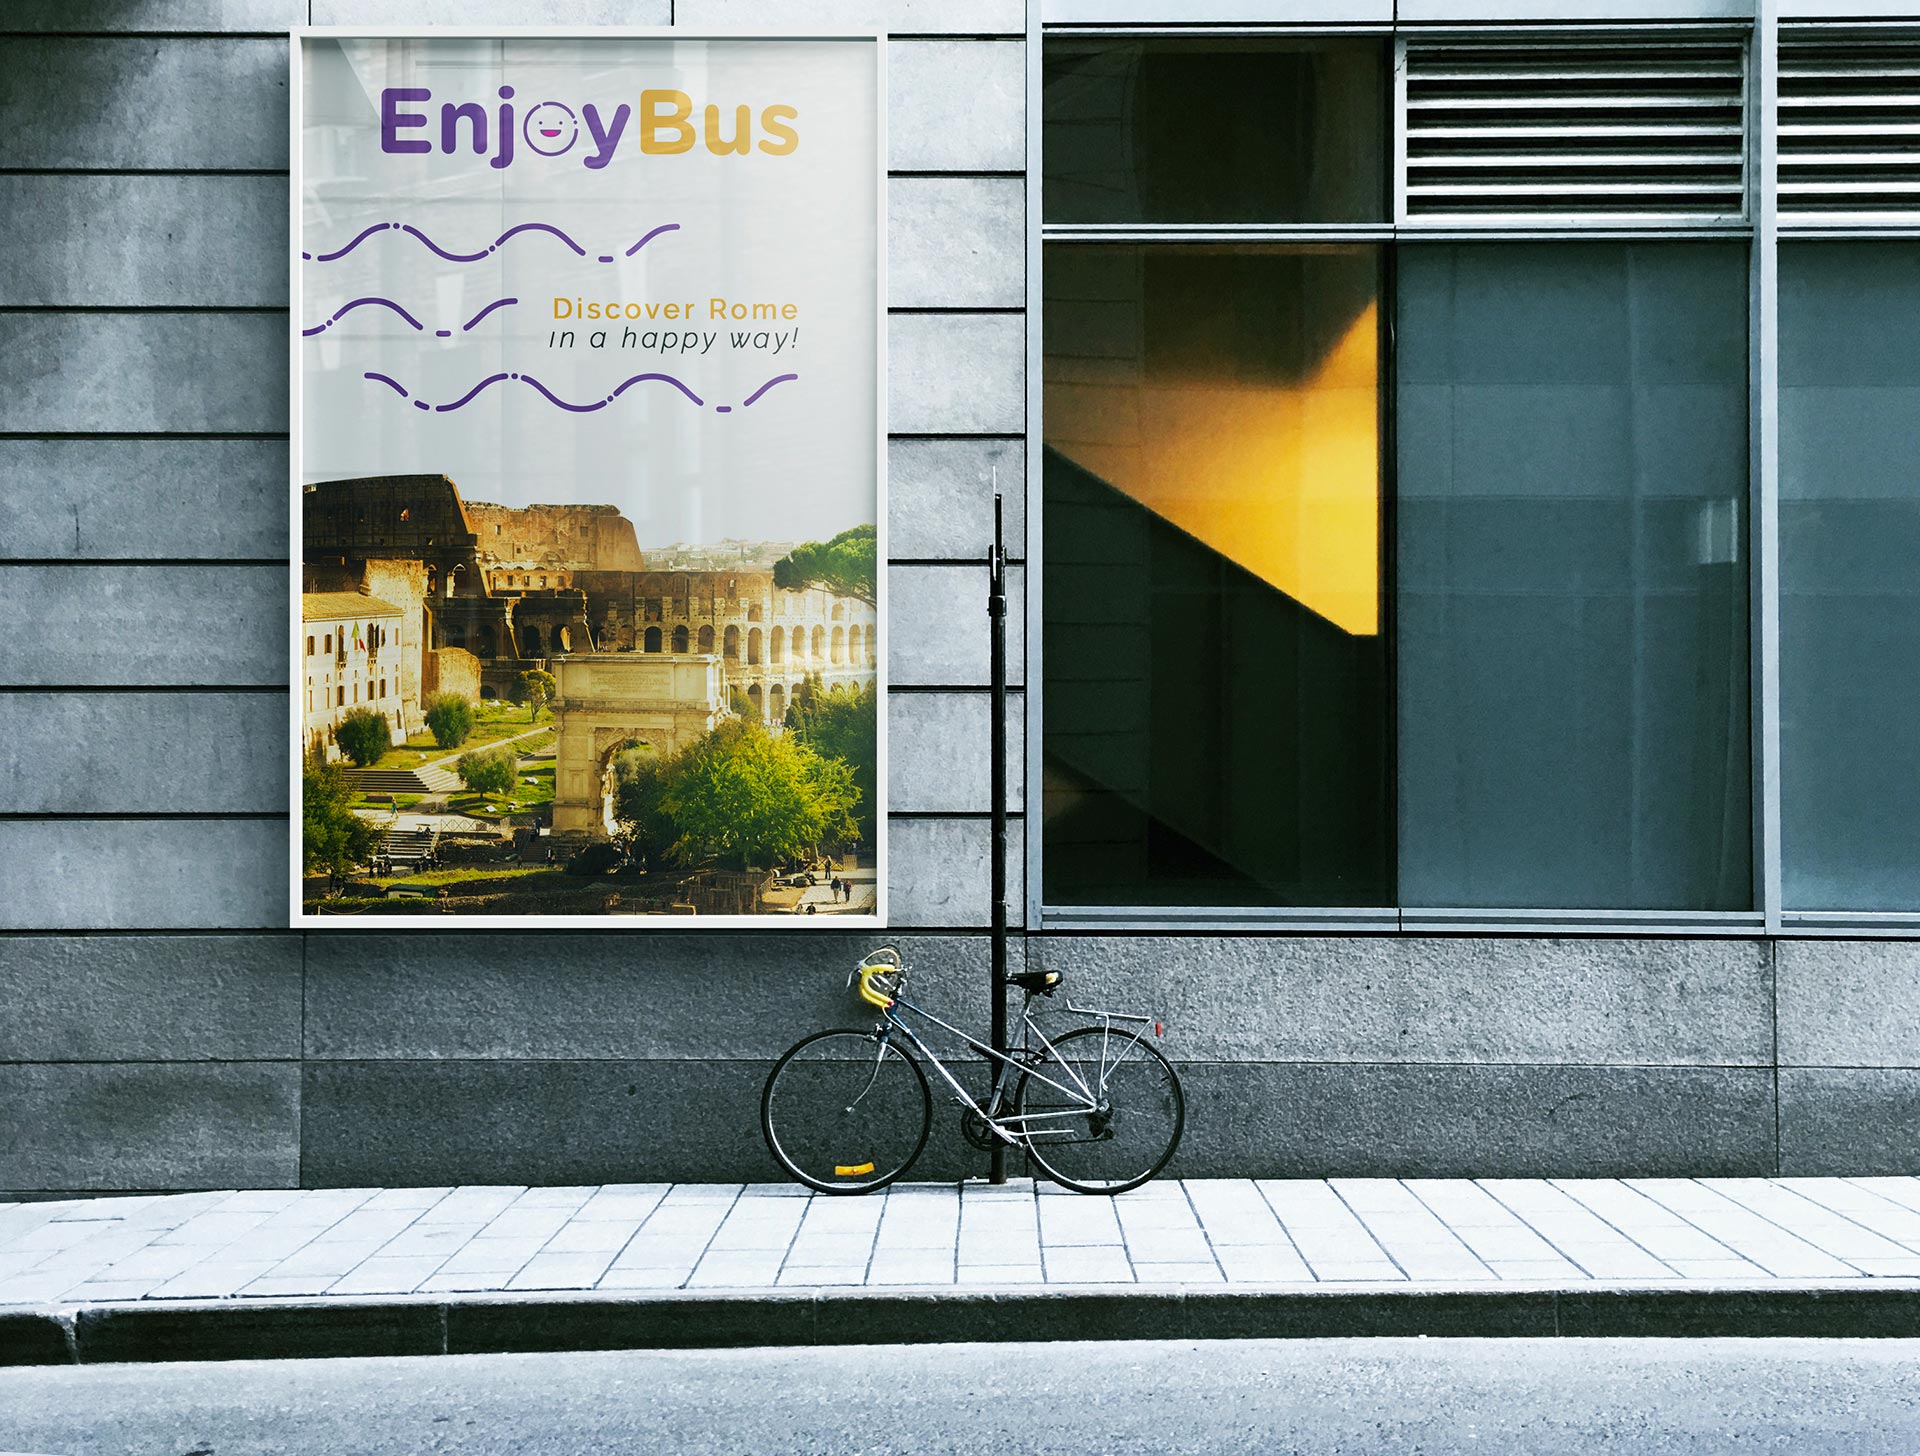 Enjoy Bus Brand Image // Fabiano Bortolami